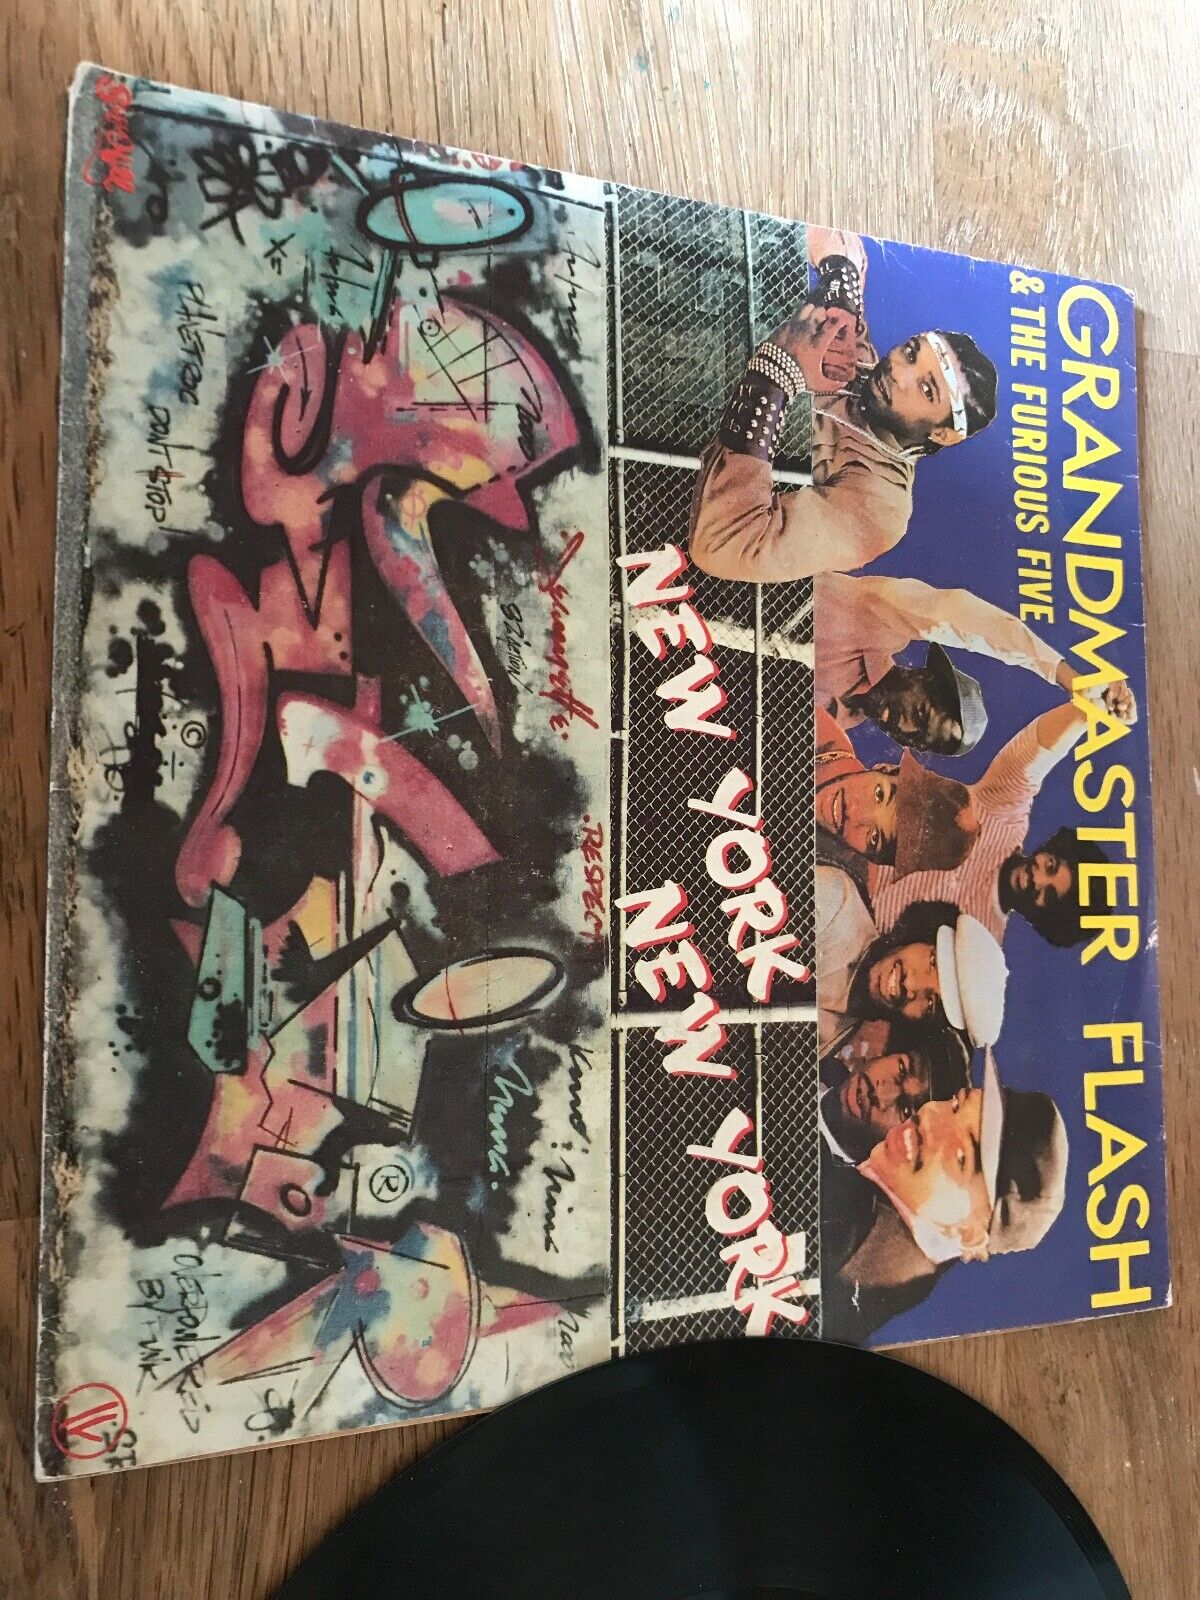 GRANDMASTER FLASH & THE FURIOUS FIVE "NEW YORK NEW YORK" 1983 SACEM FRENCH EDITI